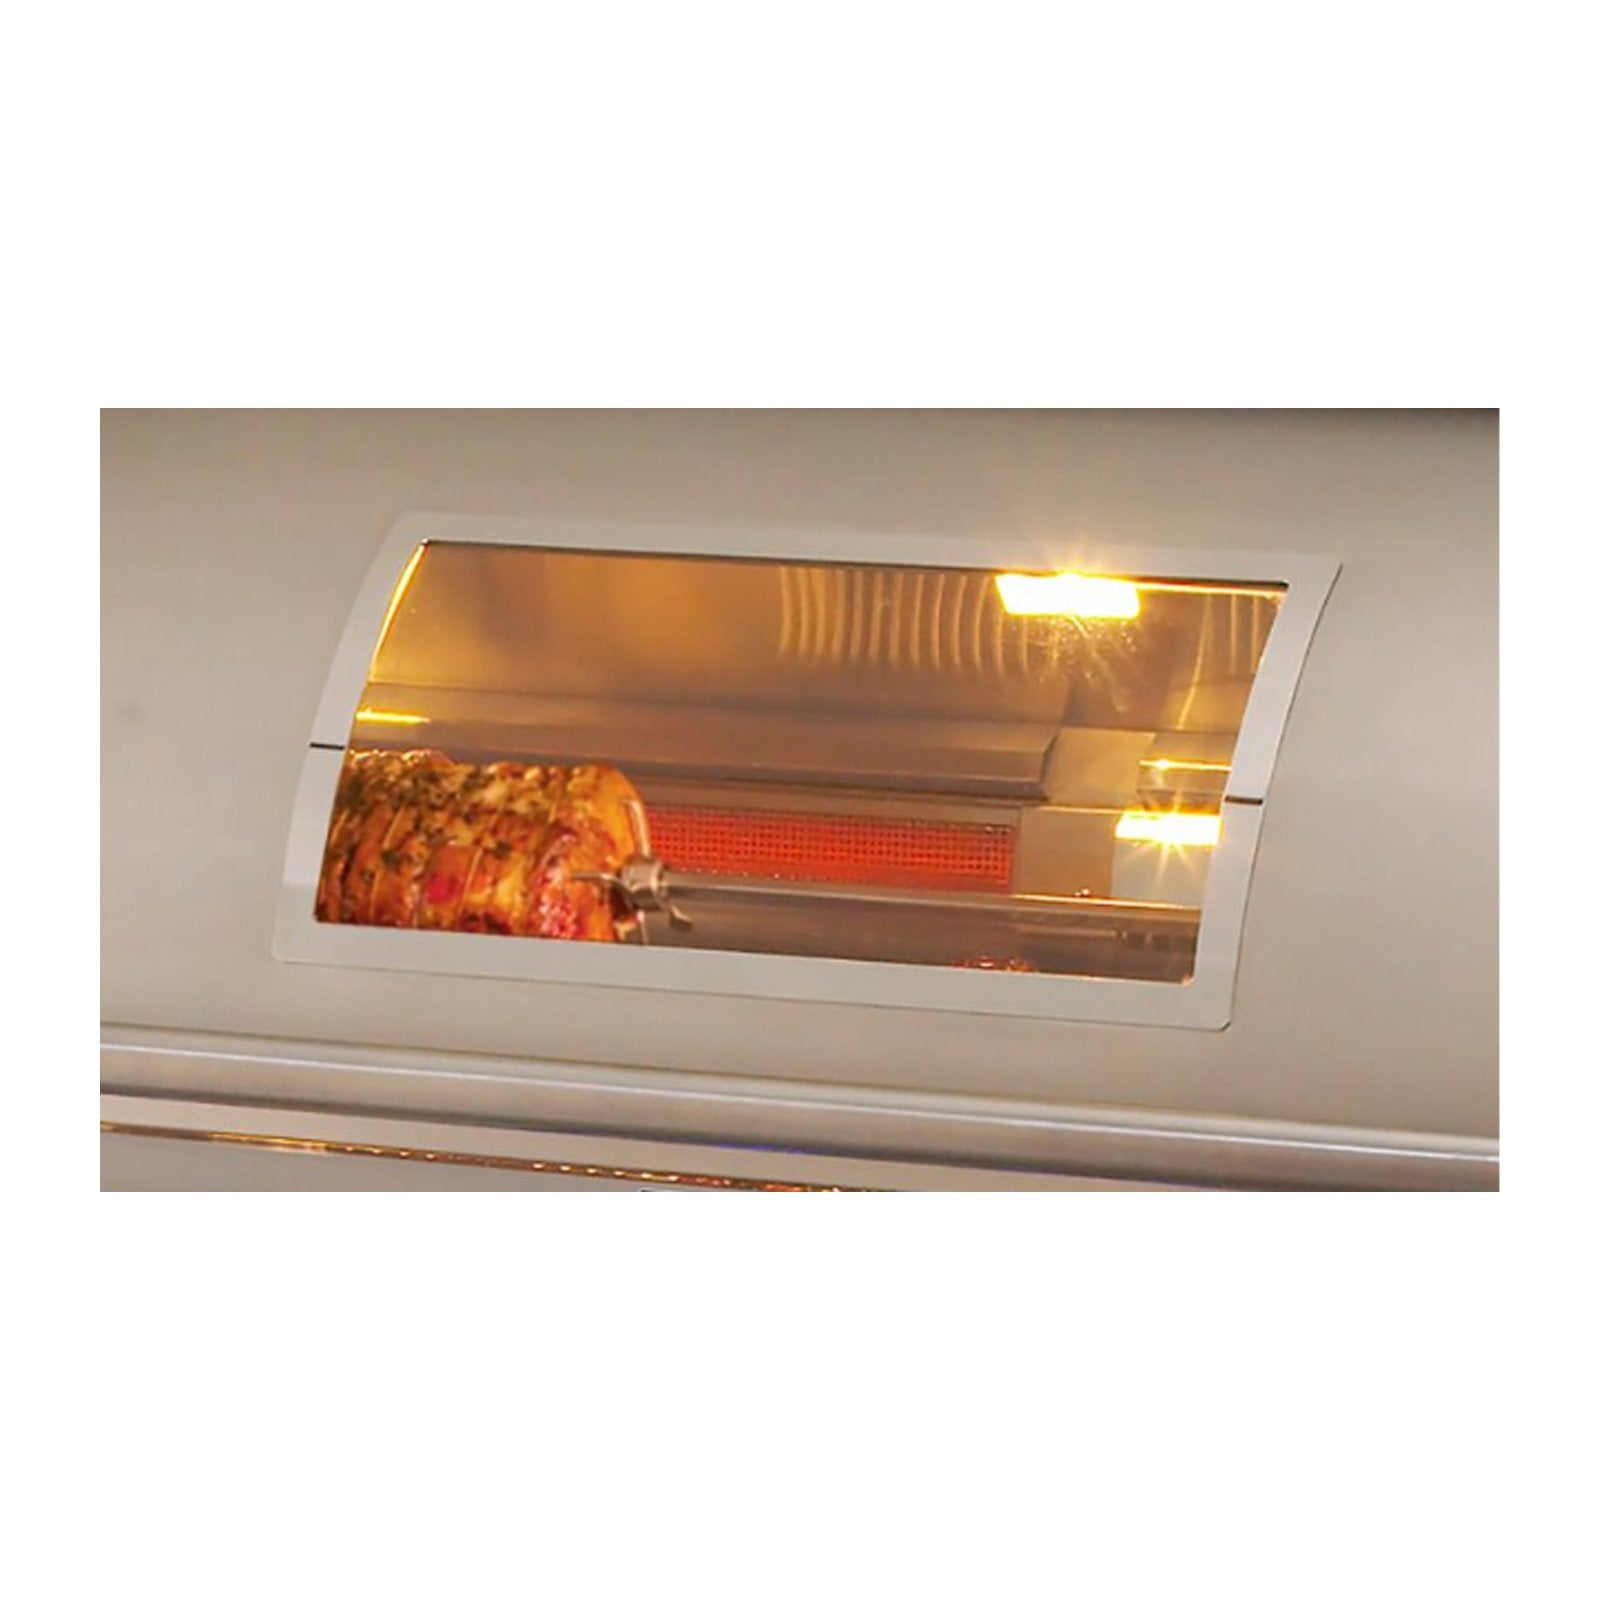 fire-magic-e790i-36-built-in-grill-w-rotis-digi-thermometer-window 12